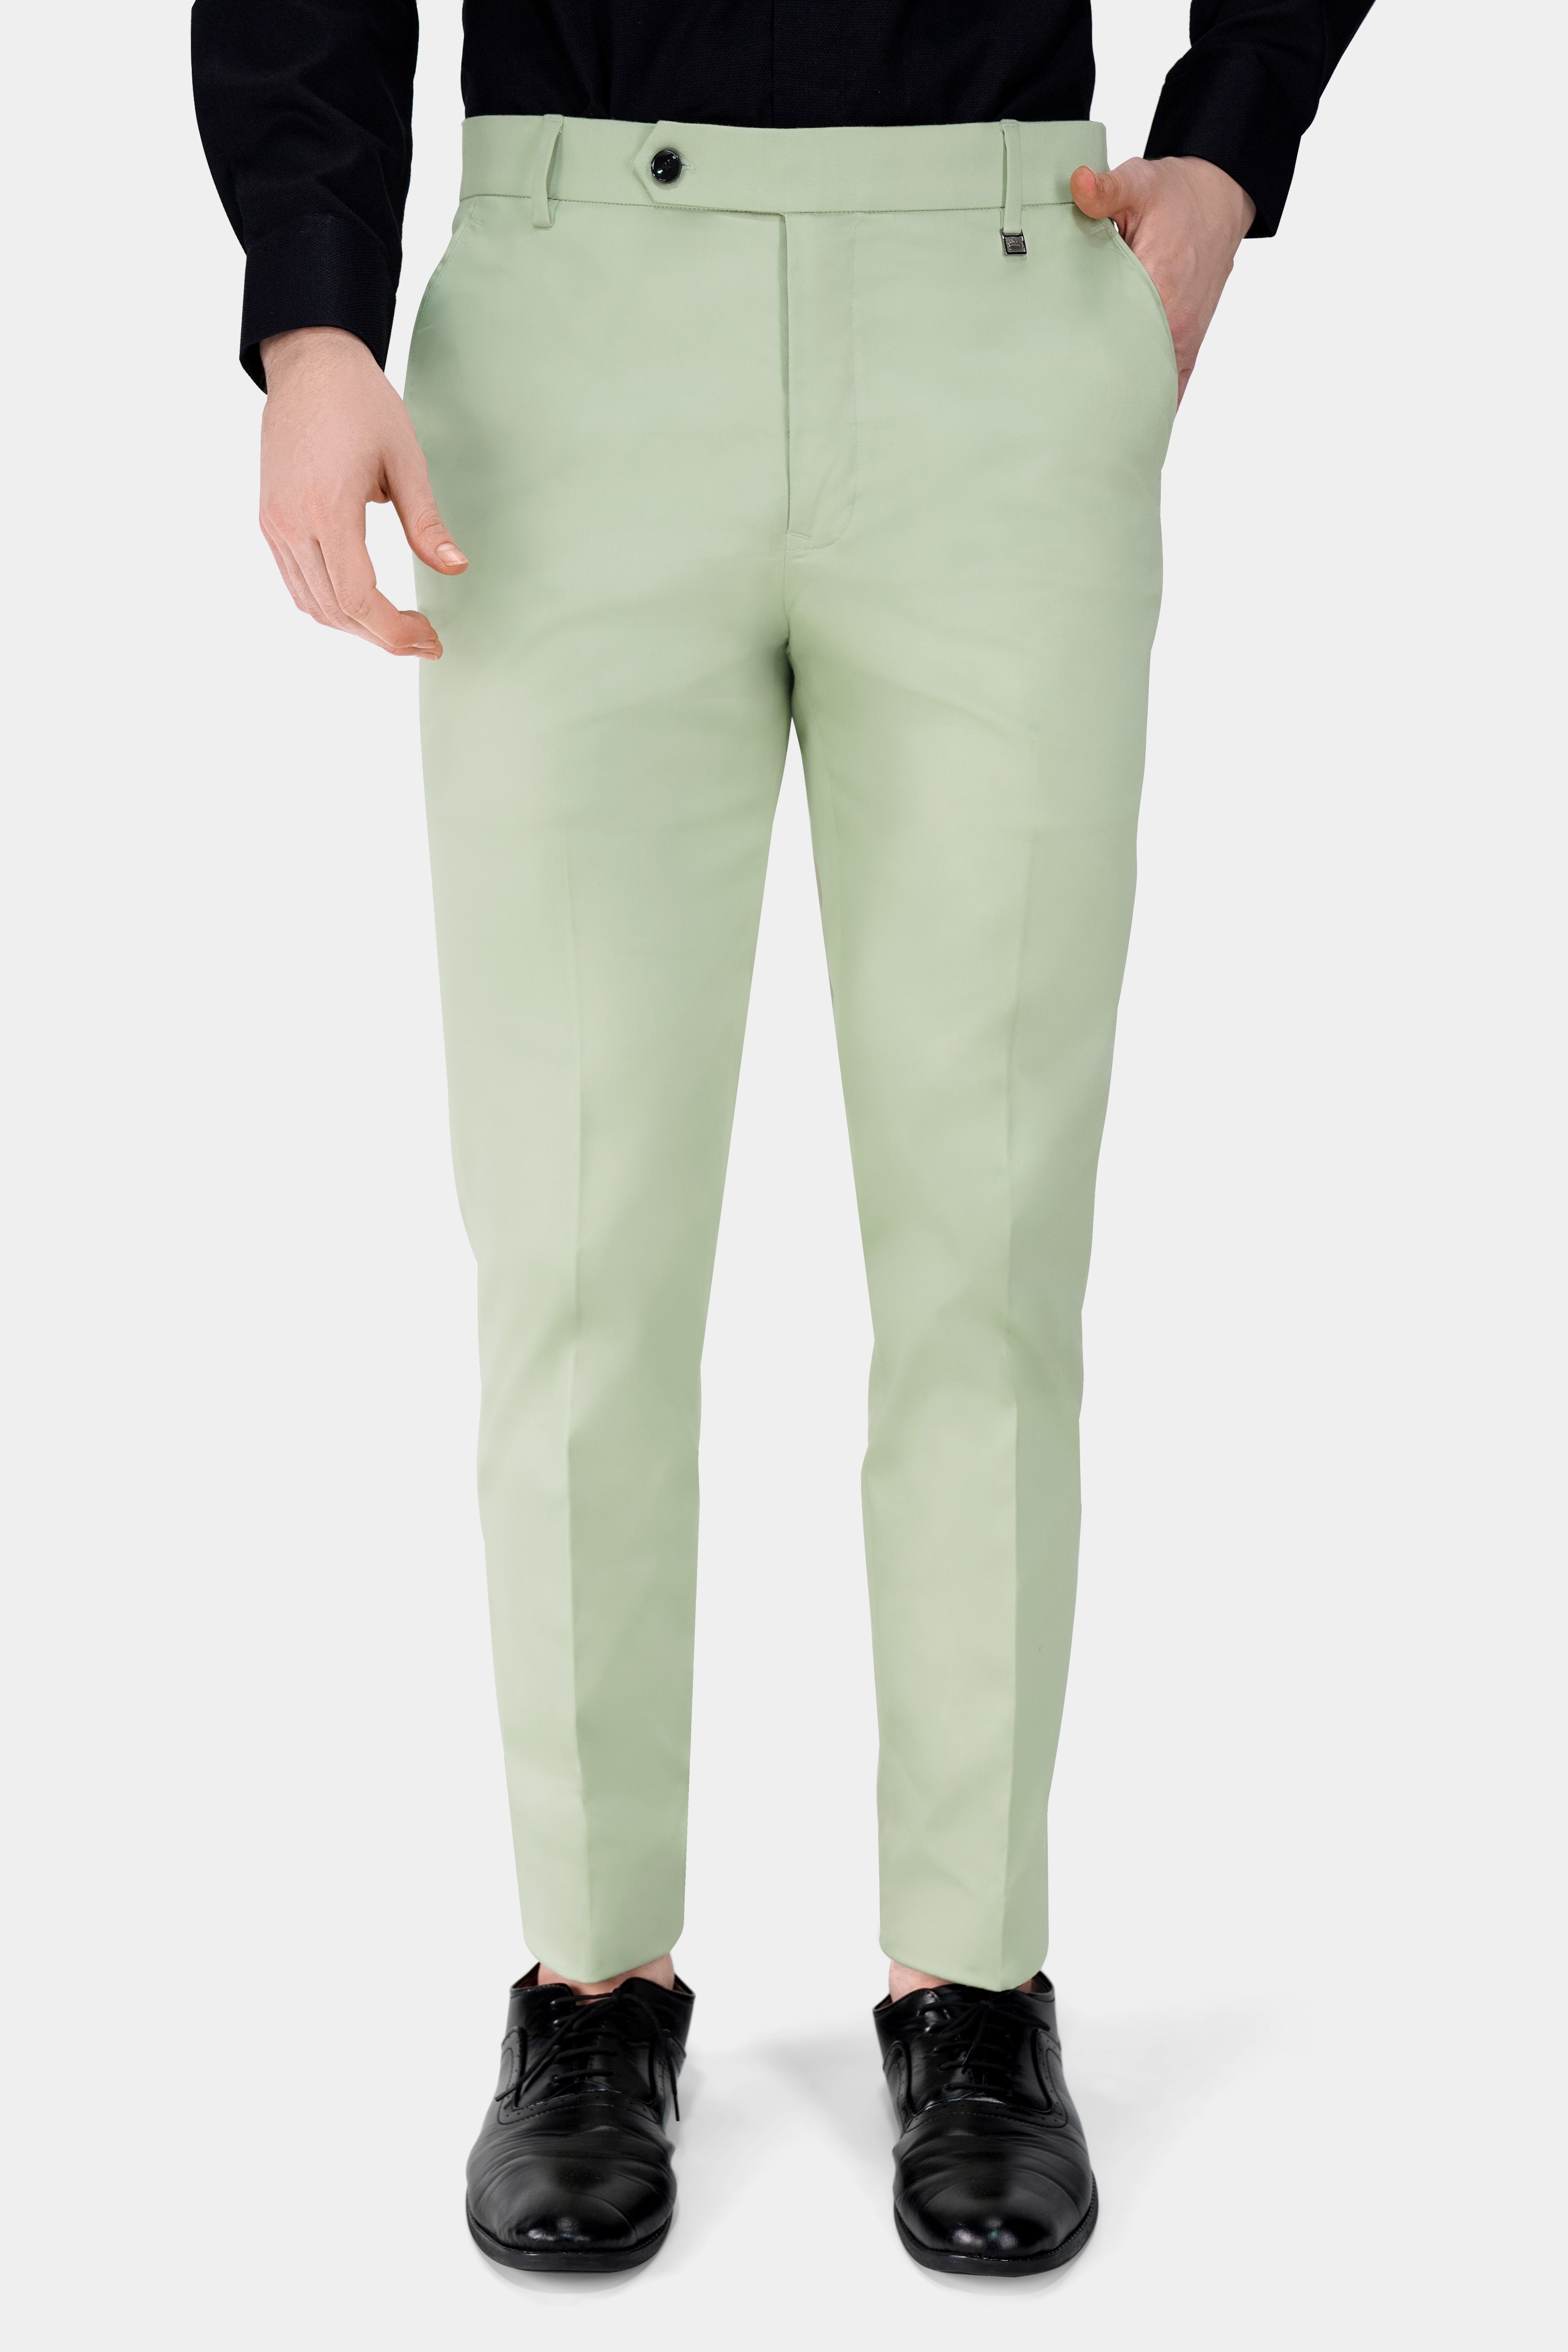 Coriander Green Premium Cotton Stretchable Traveler Pant T2793-28, T2793-30, T2793-32, T2793-34, T2793-36, T2793-38, T2793-40, T2793-42, T2793-44